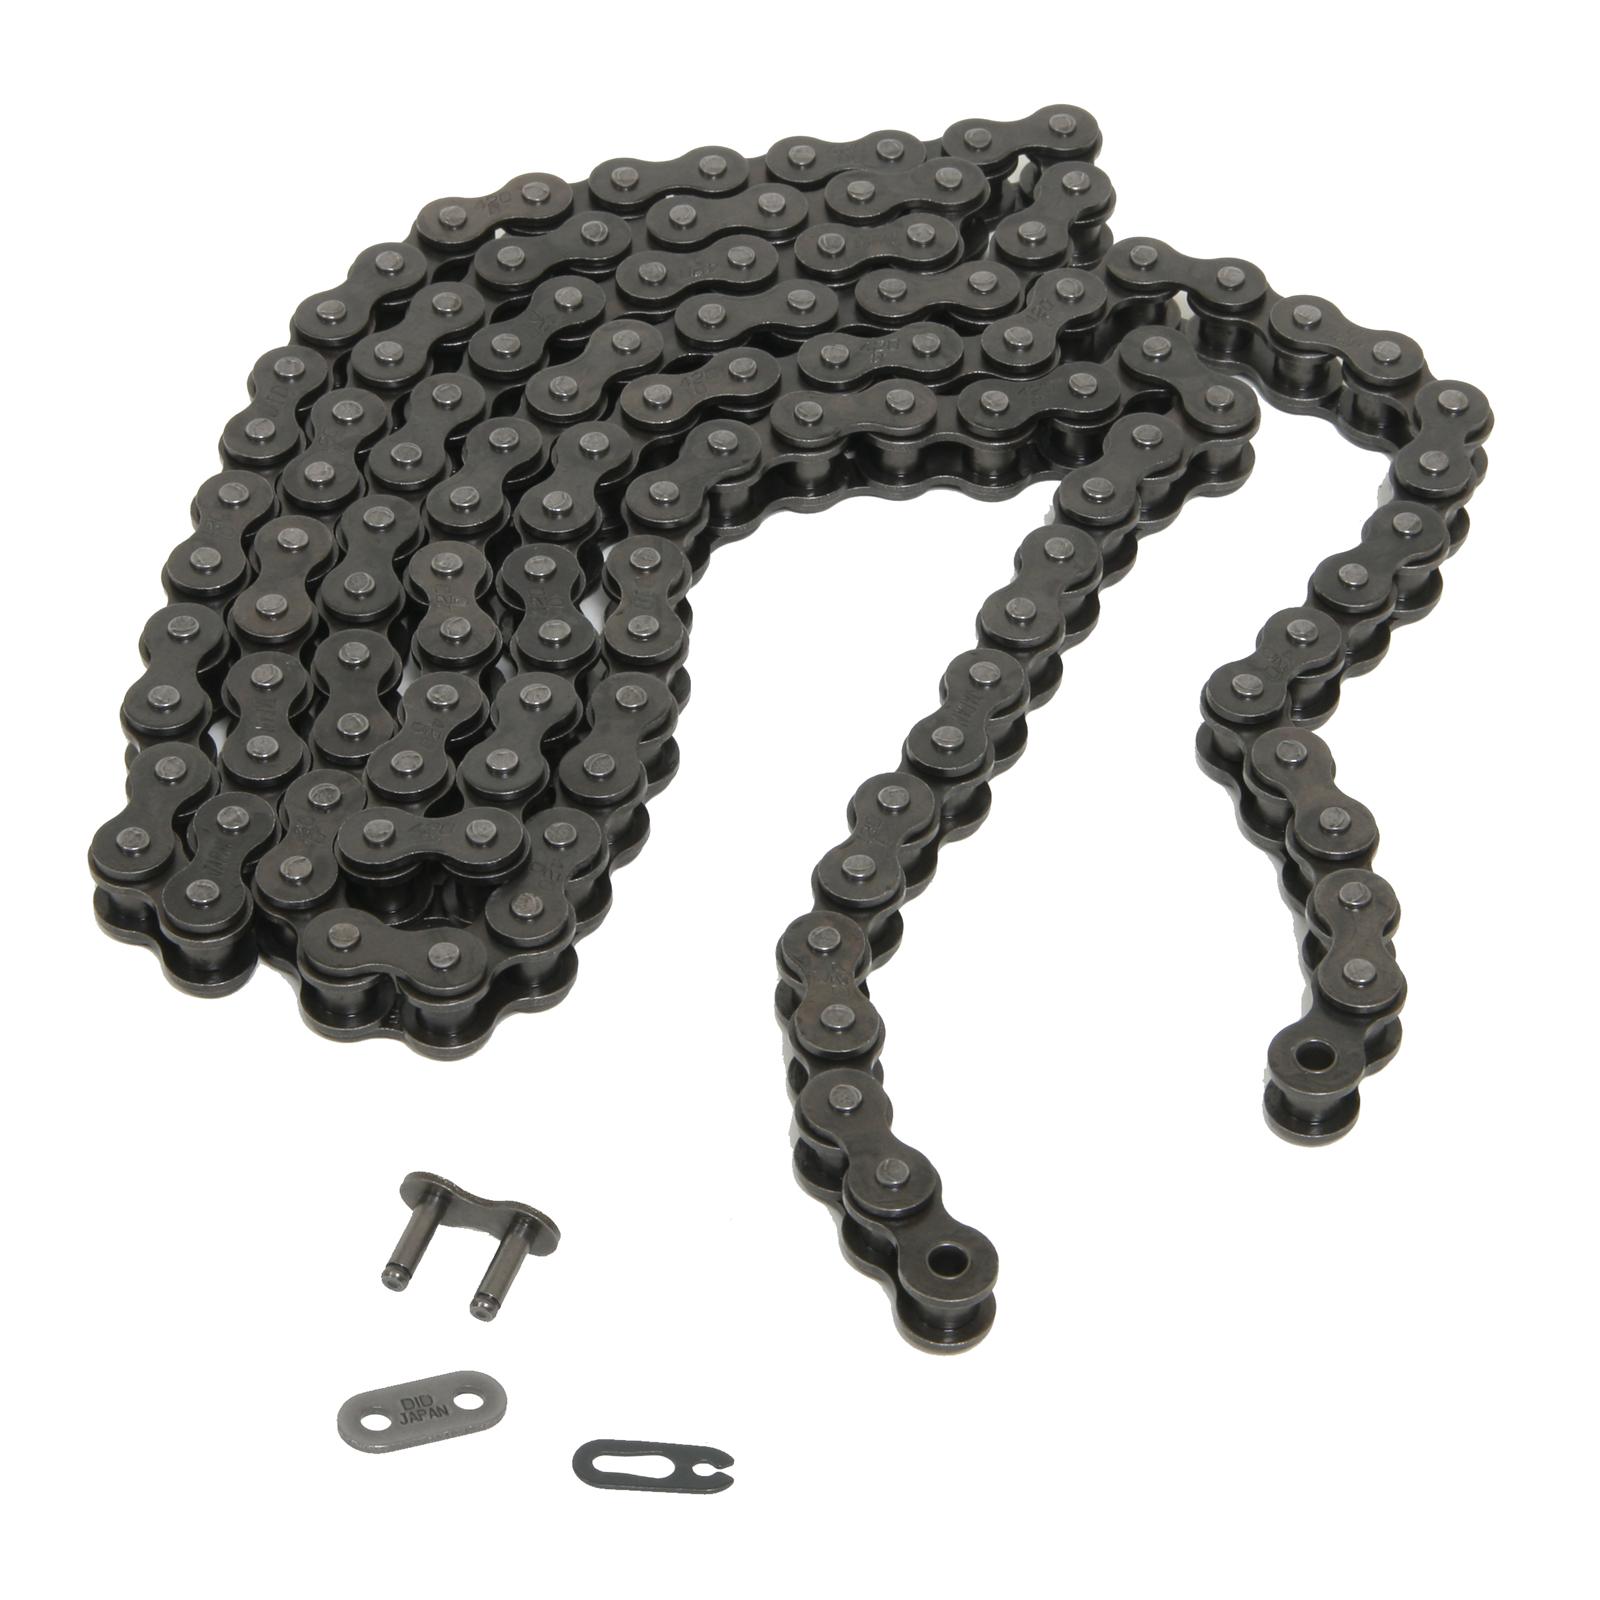 Amazon.com: WPHMOTO 420 108 Link O-ring Drive Chain for Pit Dirt Bike ATV  Quad : Automotive